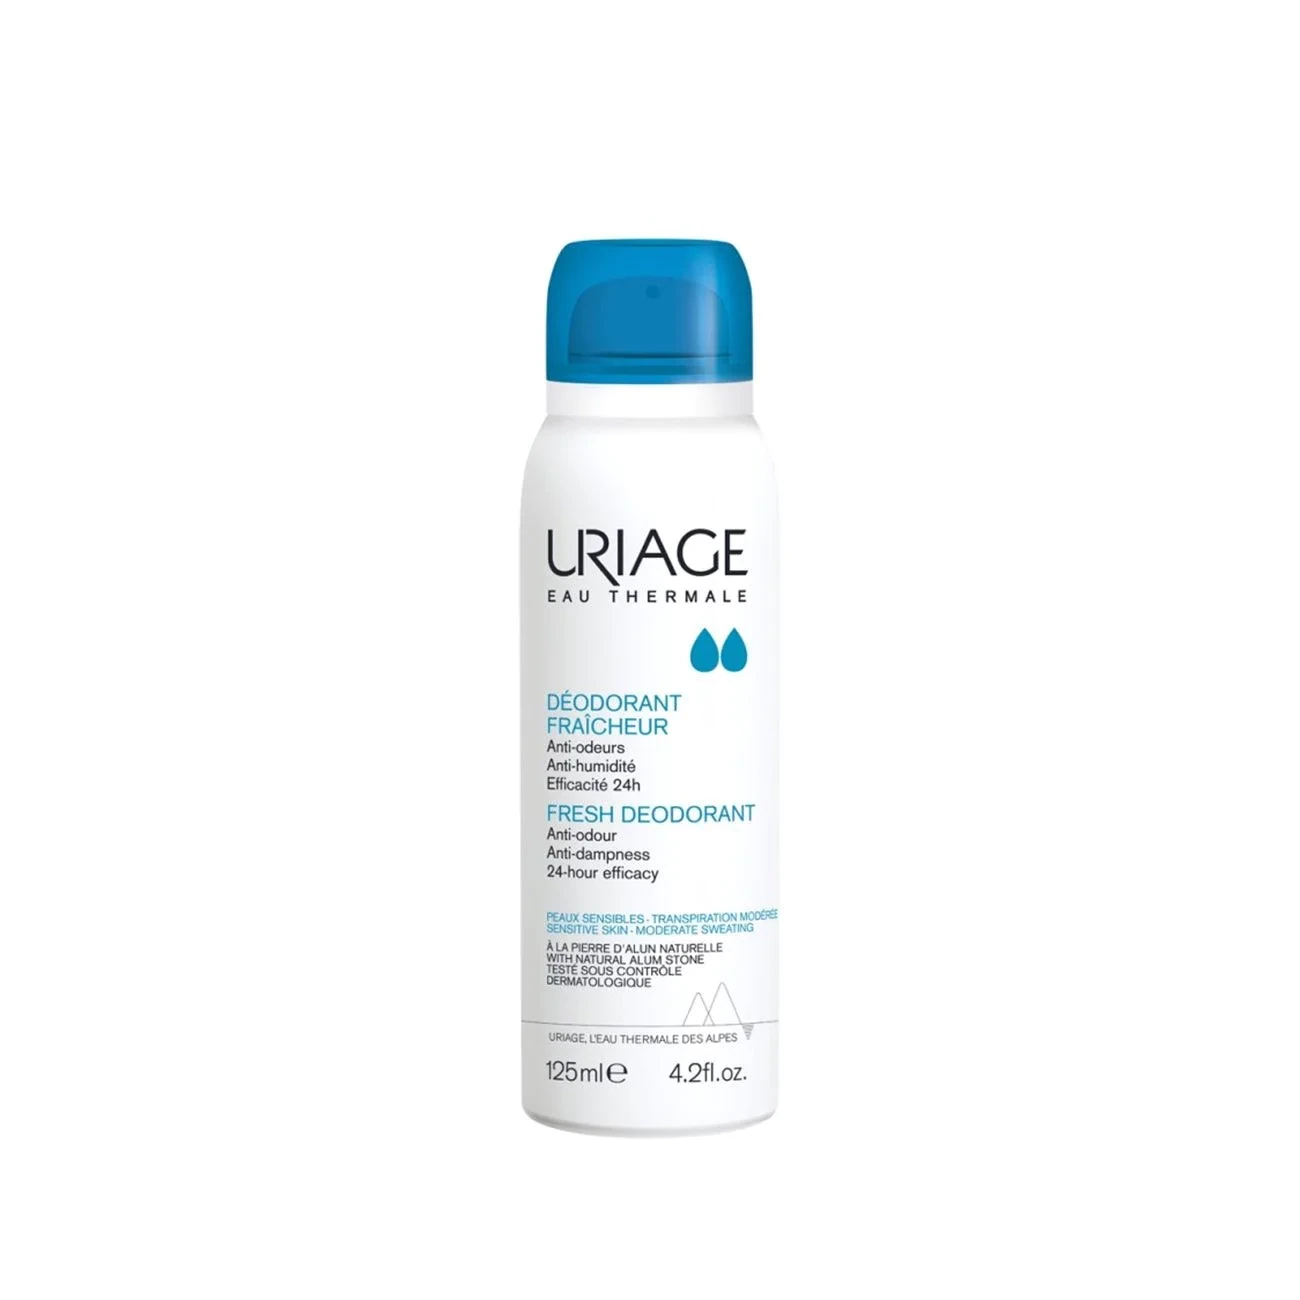 URIAGE - Fresh Deodorant - Sensitive Skin